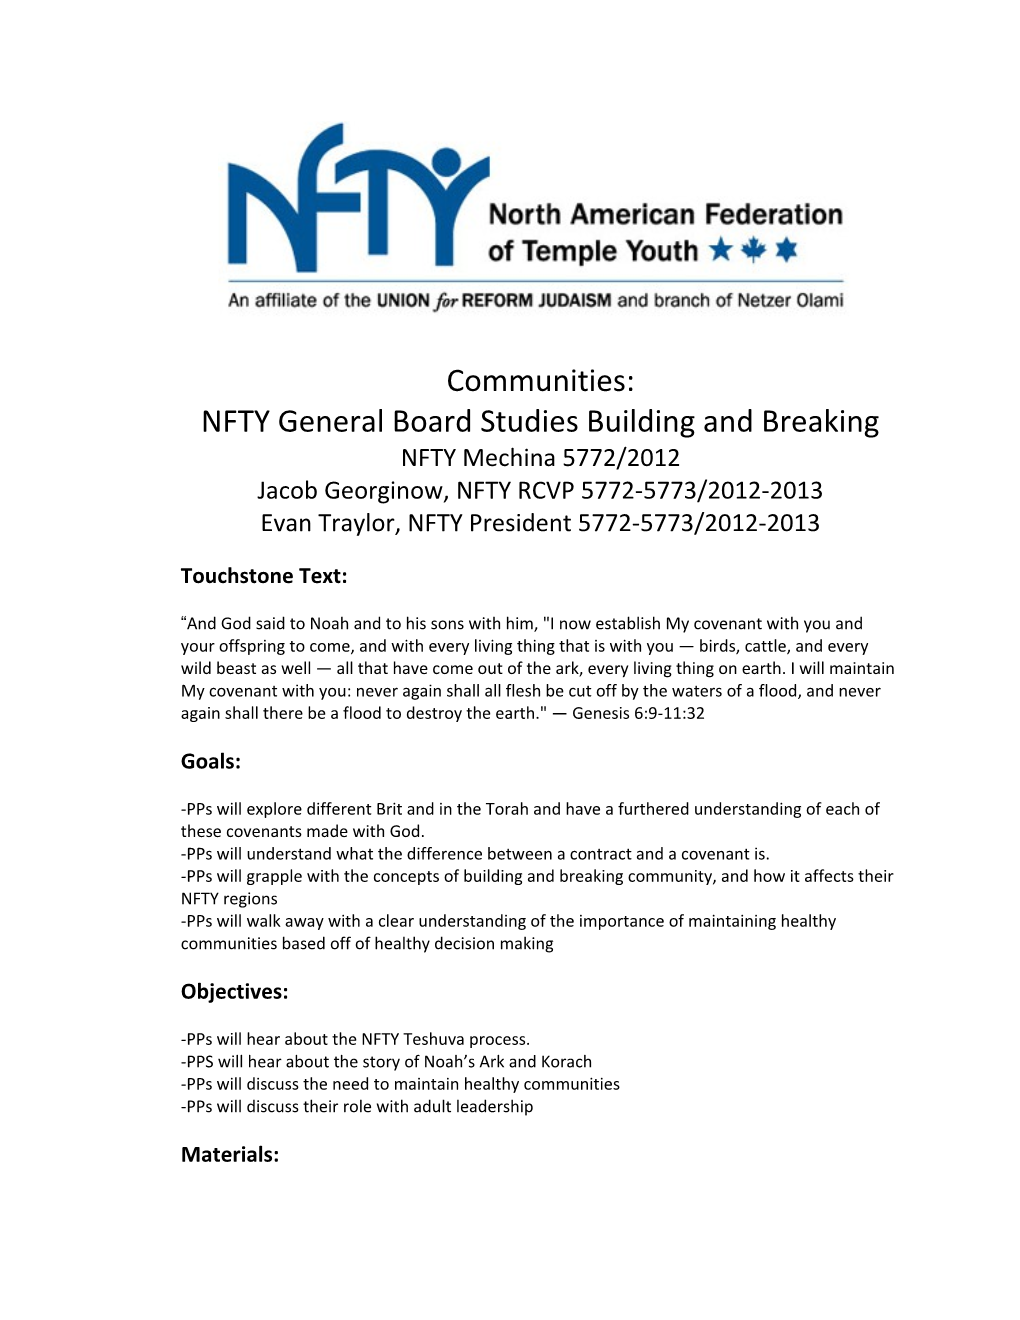 NFTY General Board Studies Building and Breaking